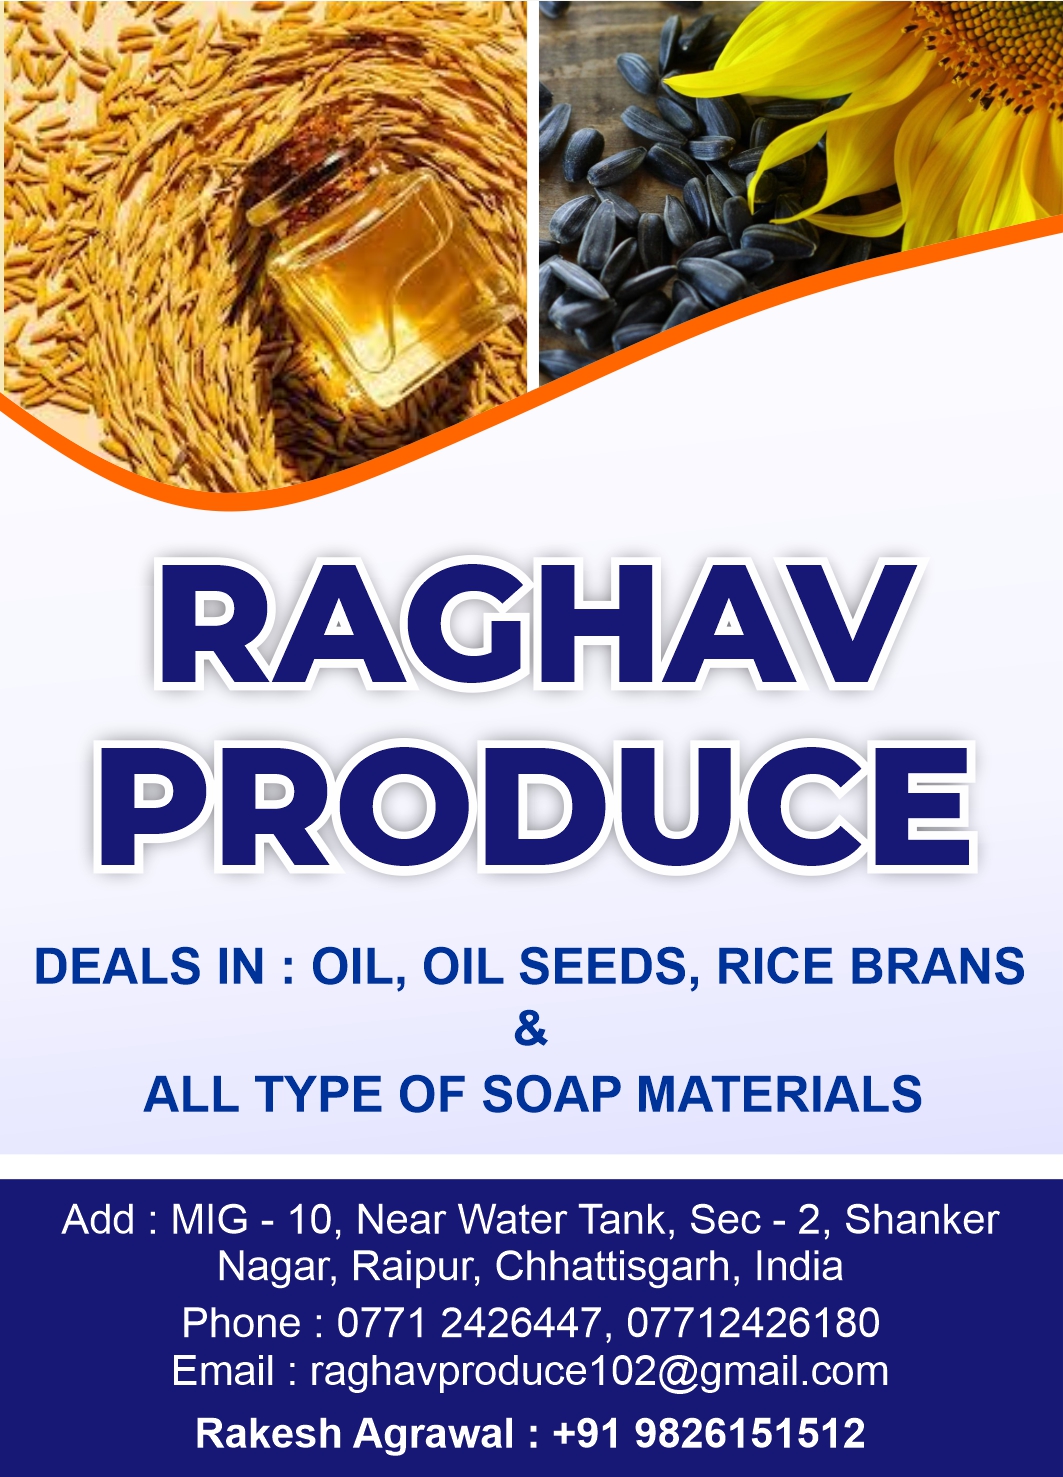 Raghav Produce